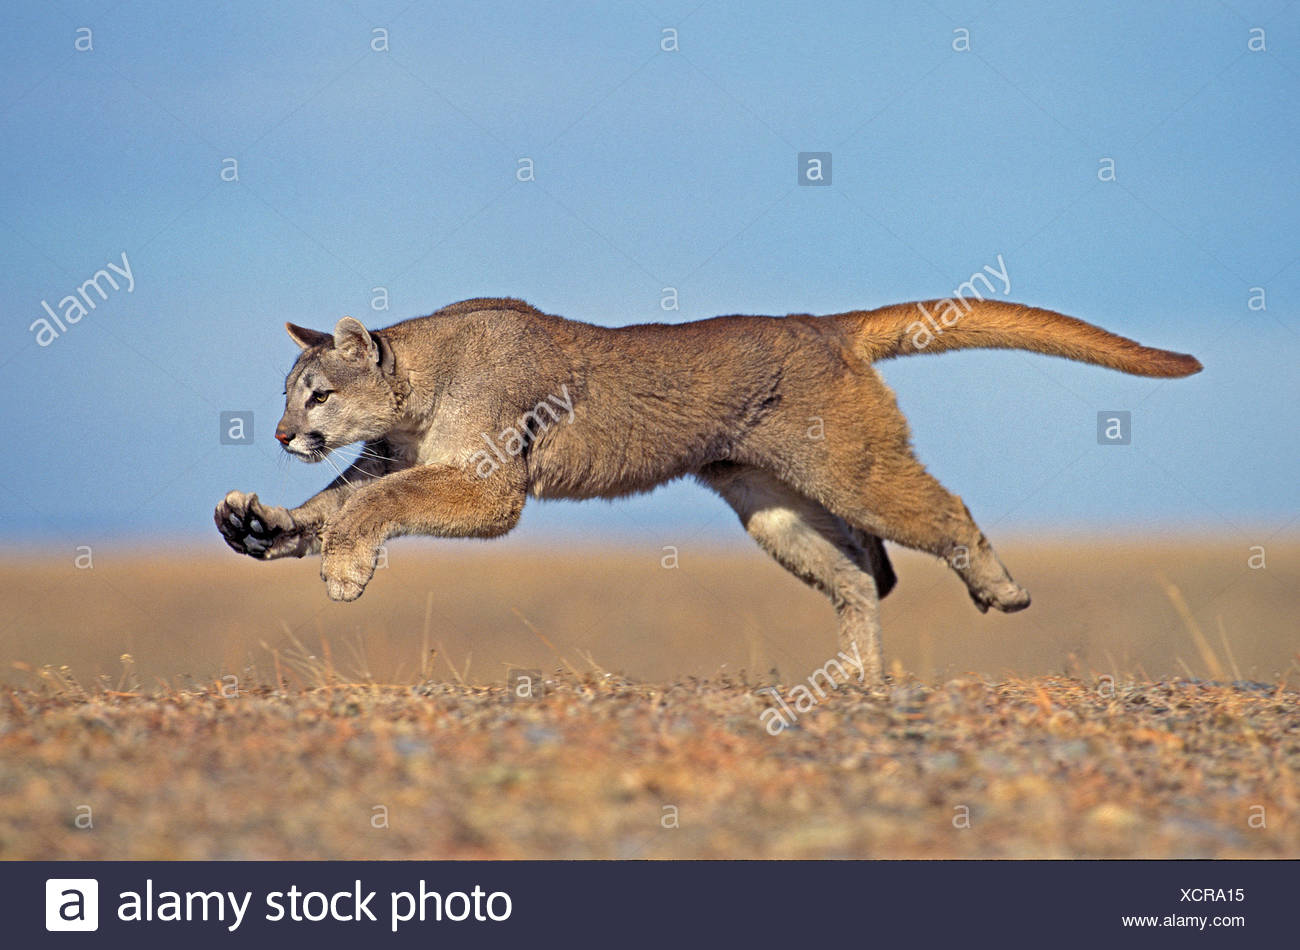 animal puma running